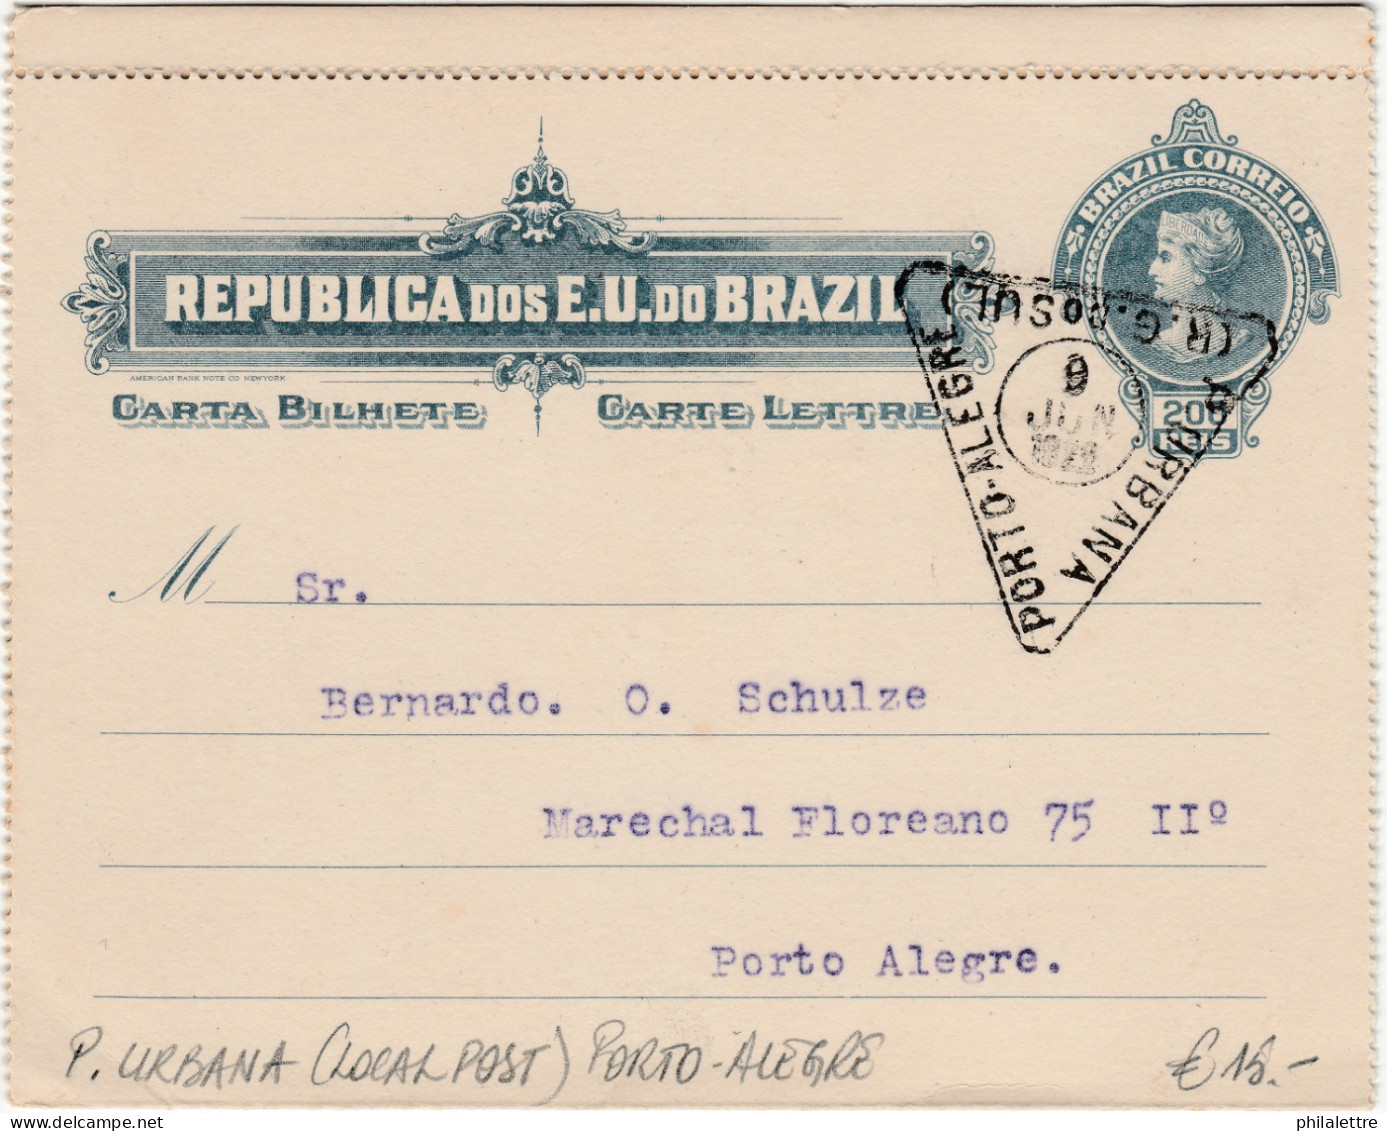 BRAZIL 1922 200 Reis Letter-Card Used In PORTO-ALEGRE Cancelled "P. URBANA" (City Post) - Cartas & Documentos